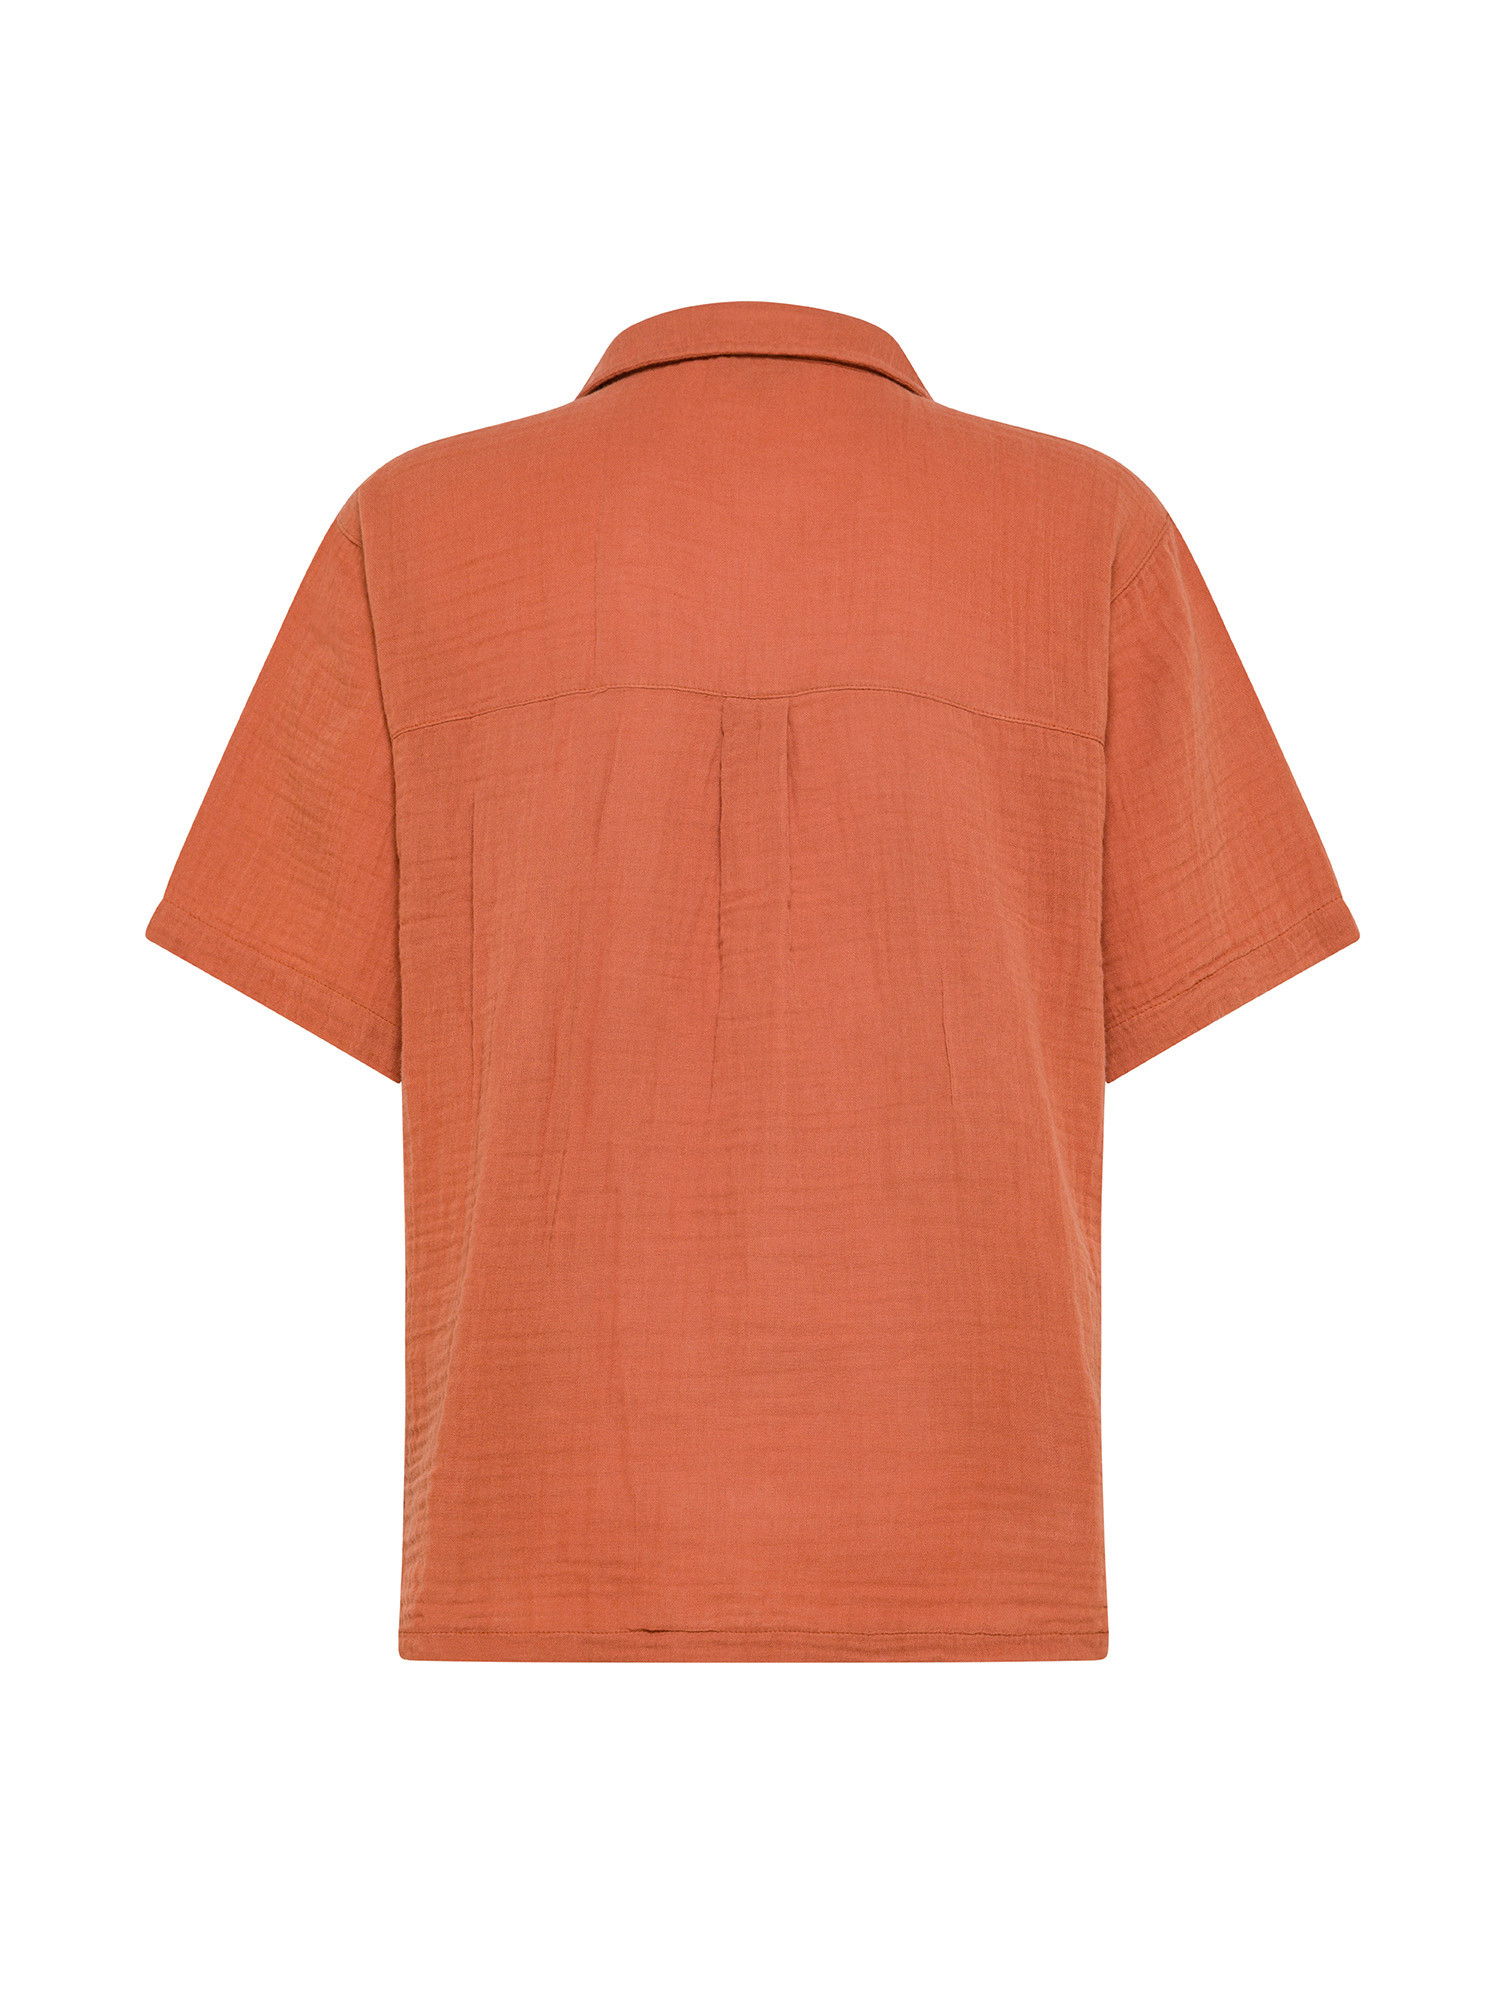 Half-sleeved cotton muslin shirt., Orange Amber, large image number 1